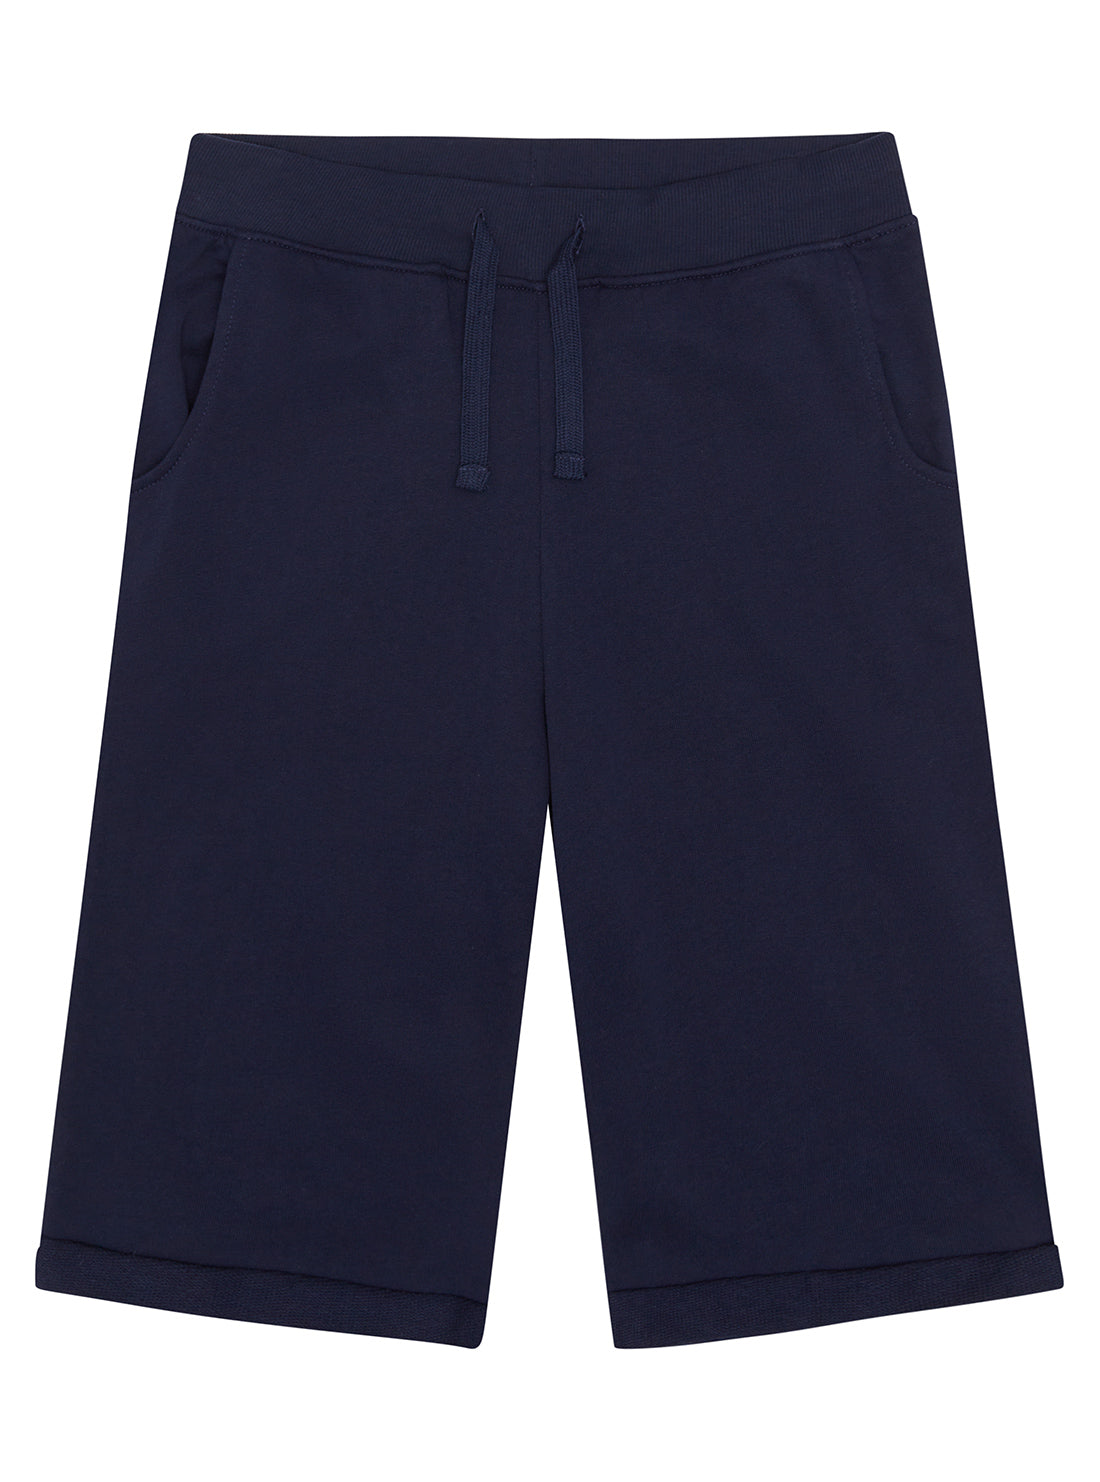 GUESS Big Boy Blue Active Shorts (7-16) L93Q25KAUG0 Front View